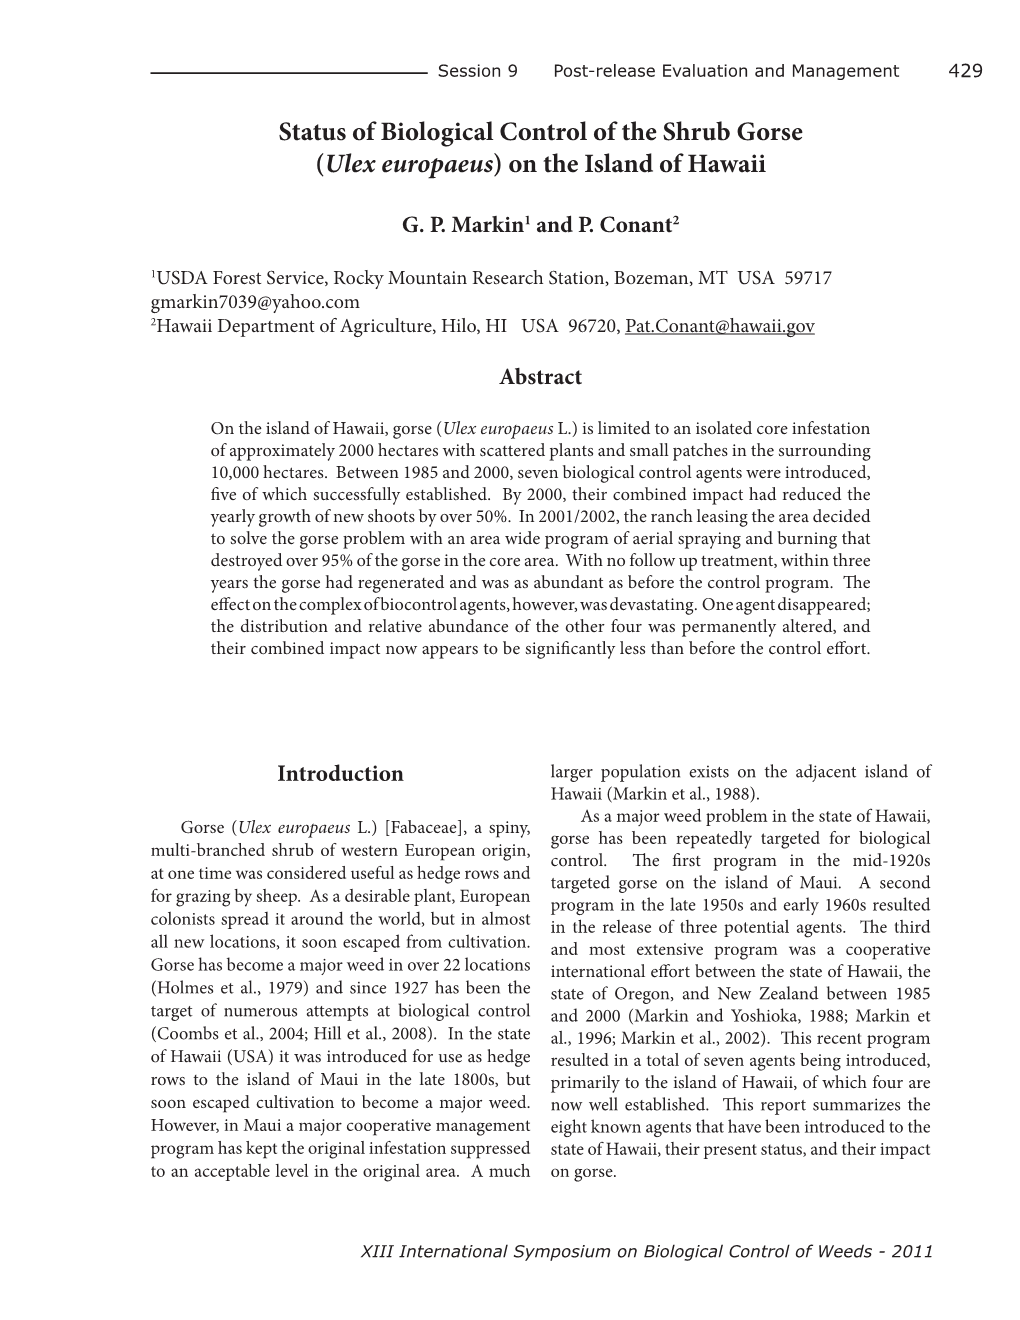 Status of Biological Control of the Shrub Gorse (Ulex Europaeus) on the Island of Hawaii